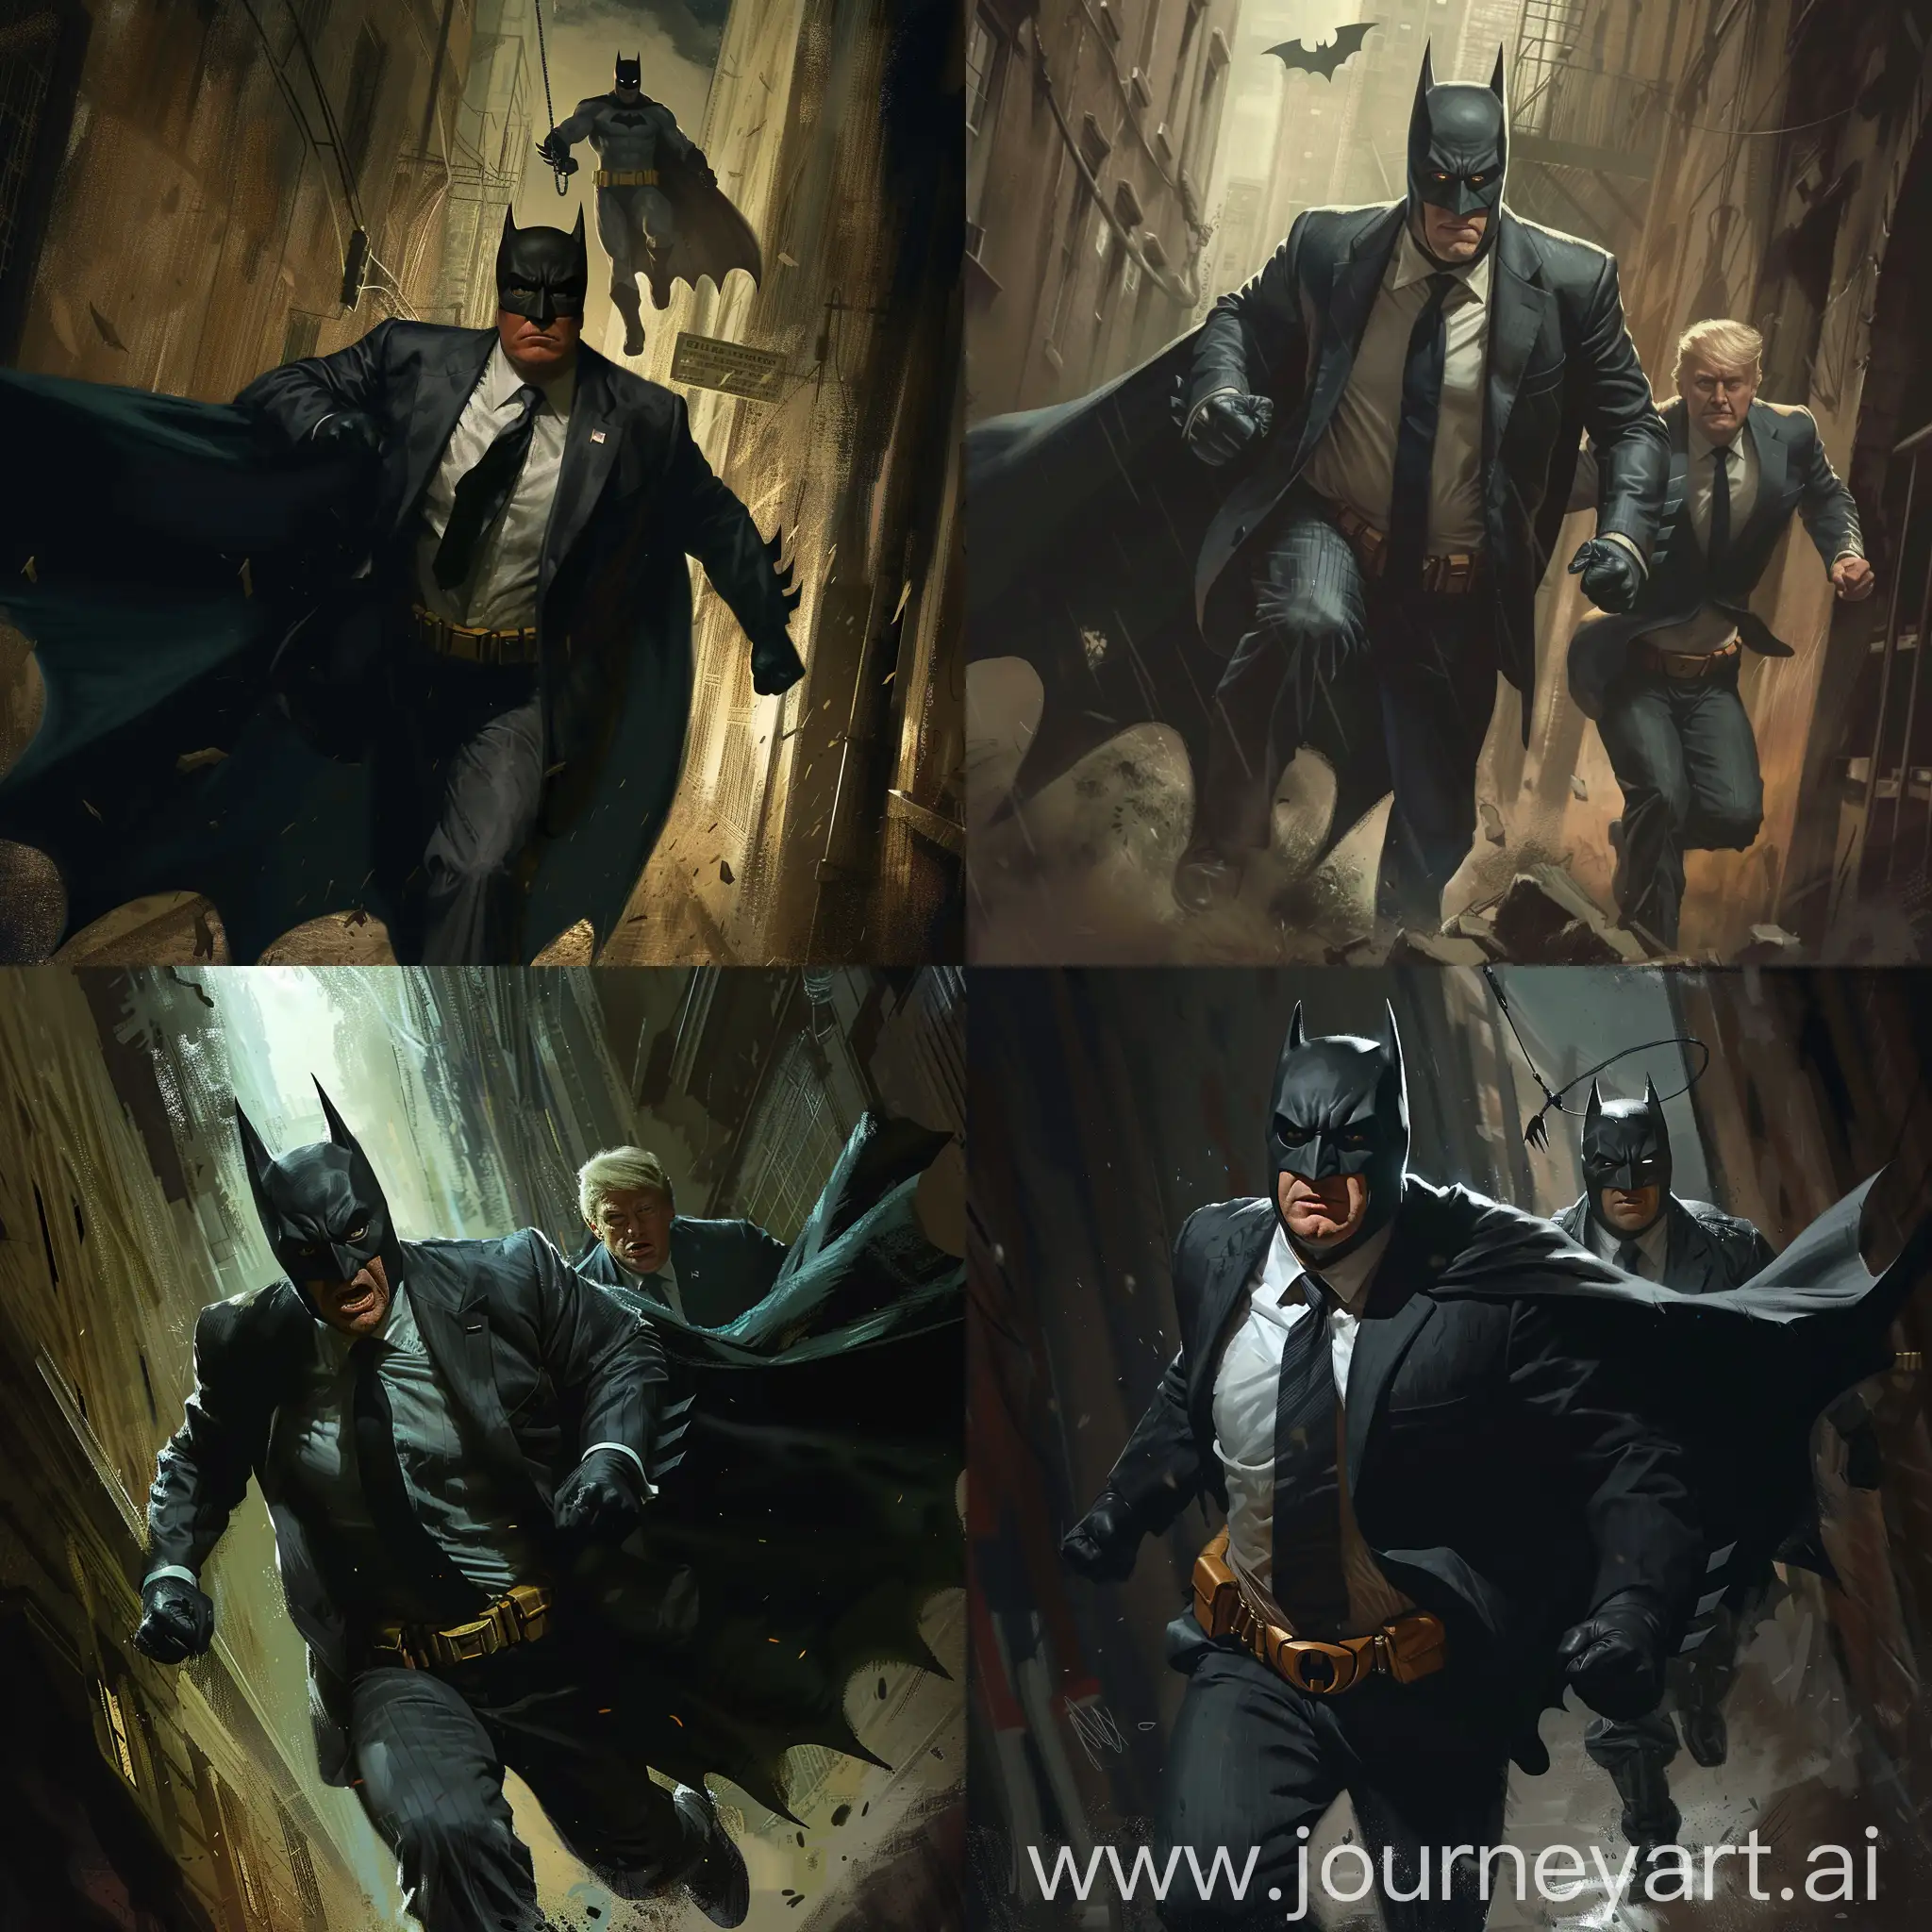 Prominent-Figure-Fleeing-from-Batman-in-Intense-Pursuit